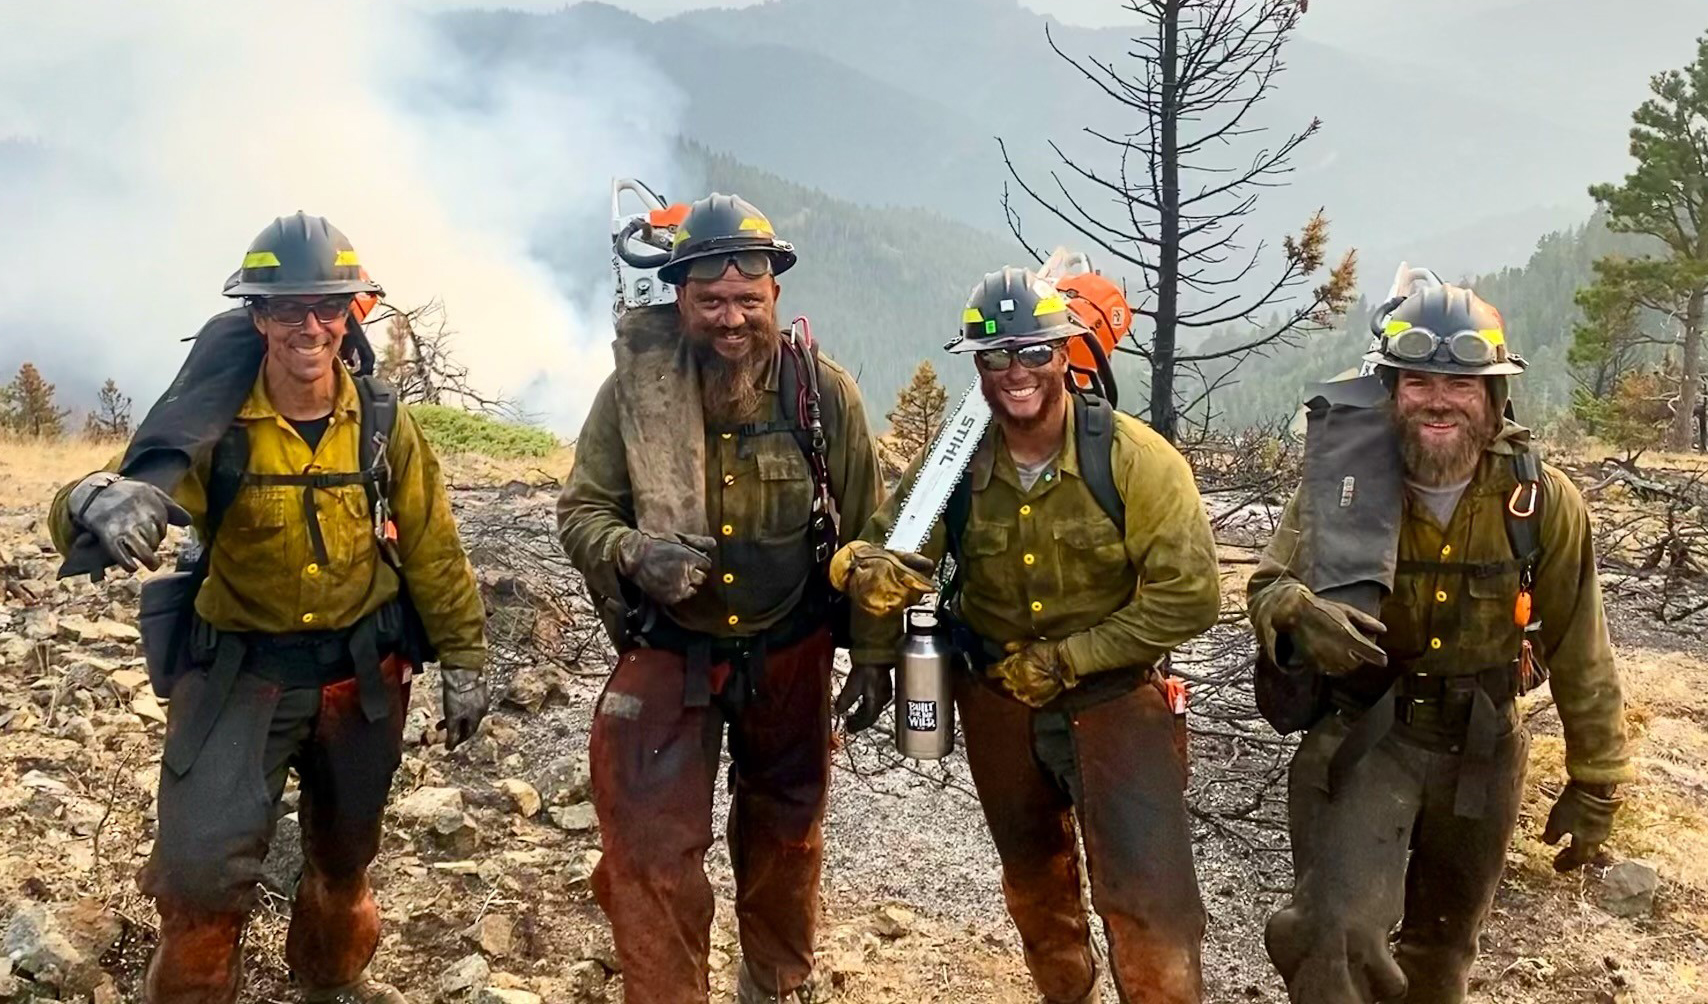 wildland firefighters in action